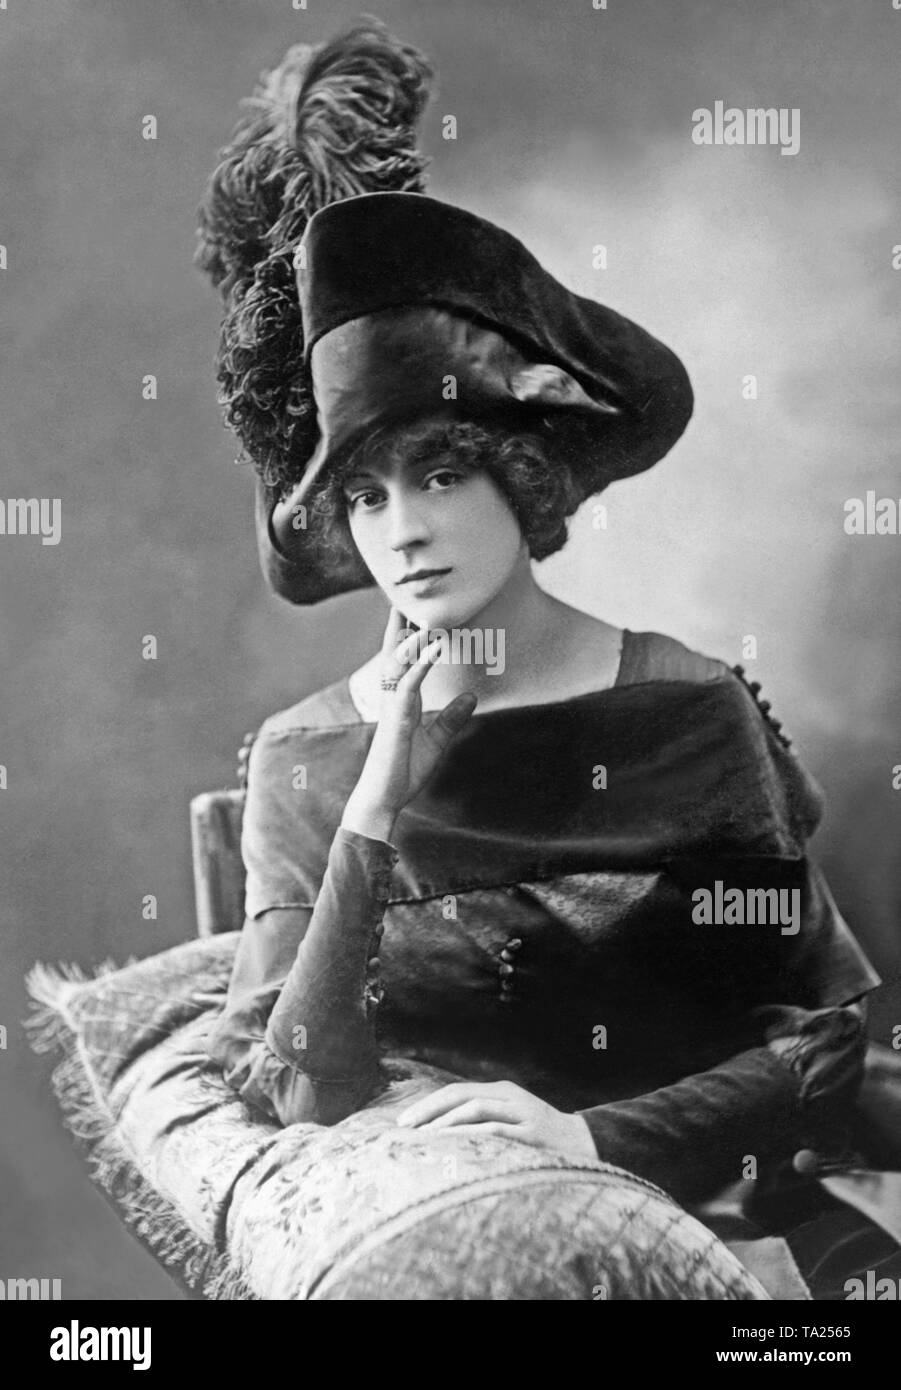 Ladies Glamorous Black Feather Ribbon 1940s 1920s Vintage Style Fancy Dress Hat 